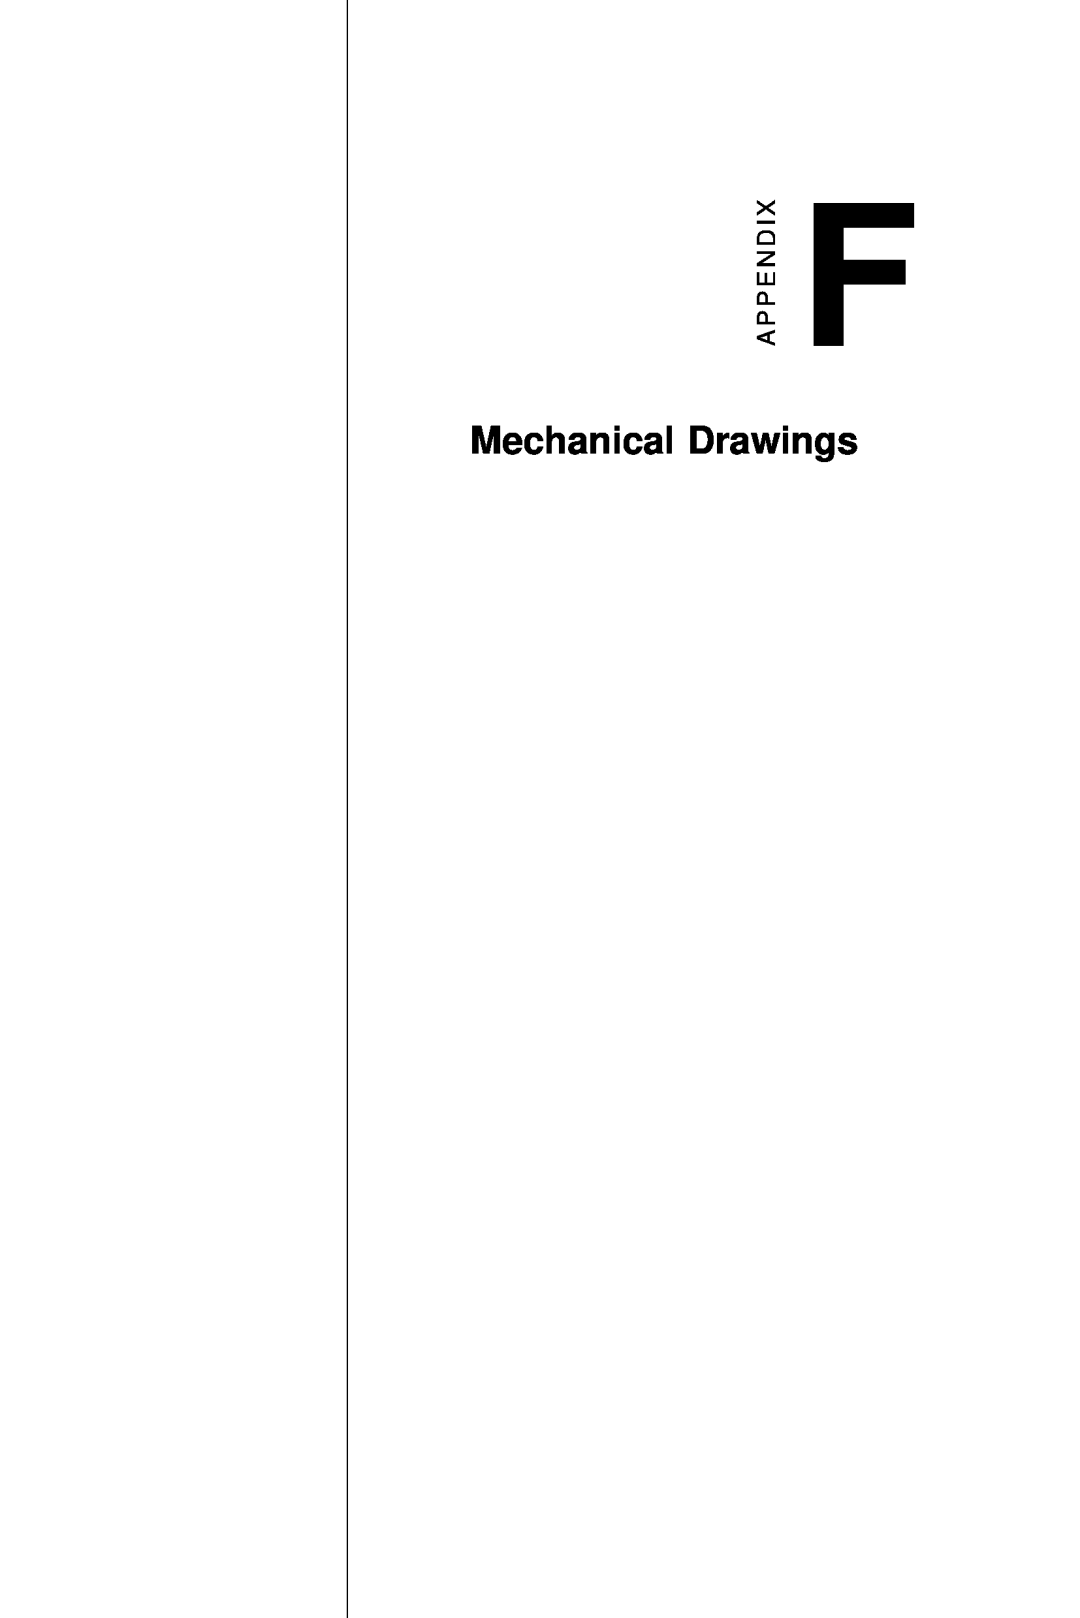 AMD PCM-5820 manual Mechanical Drawings 